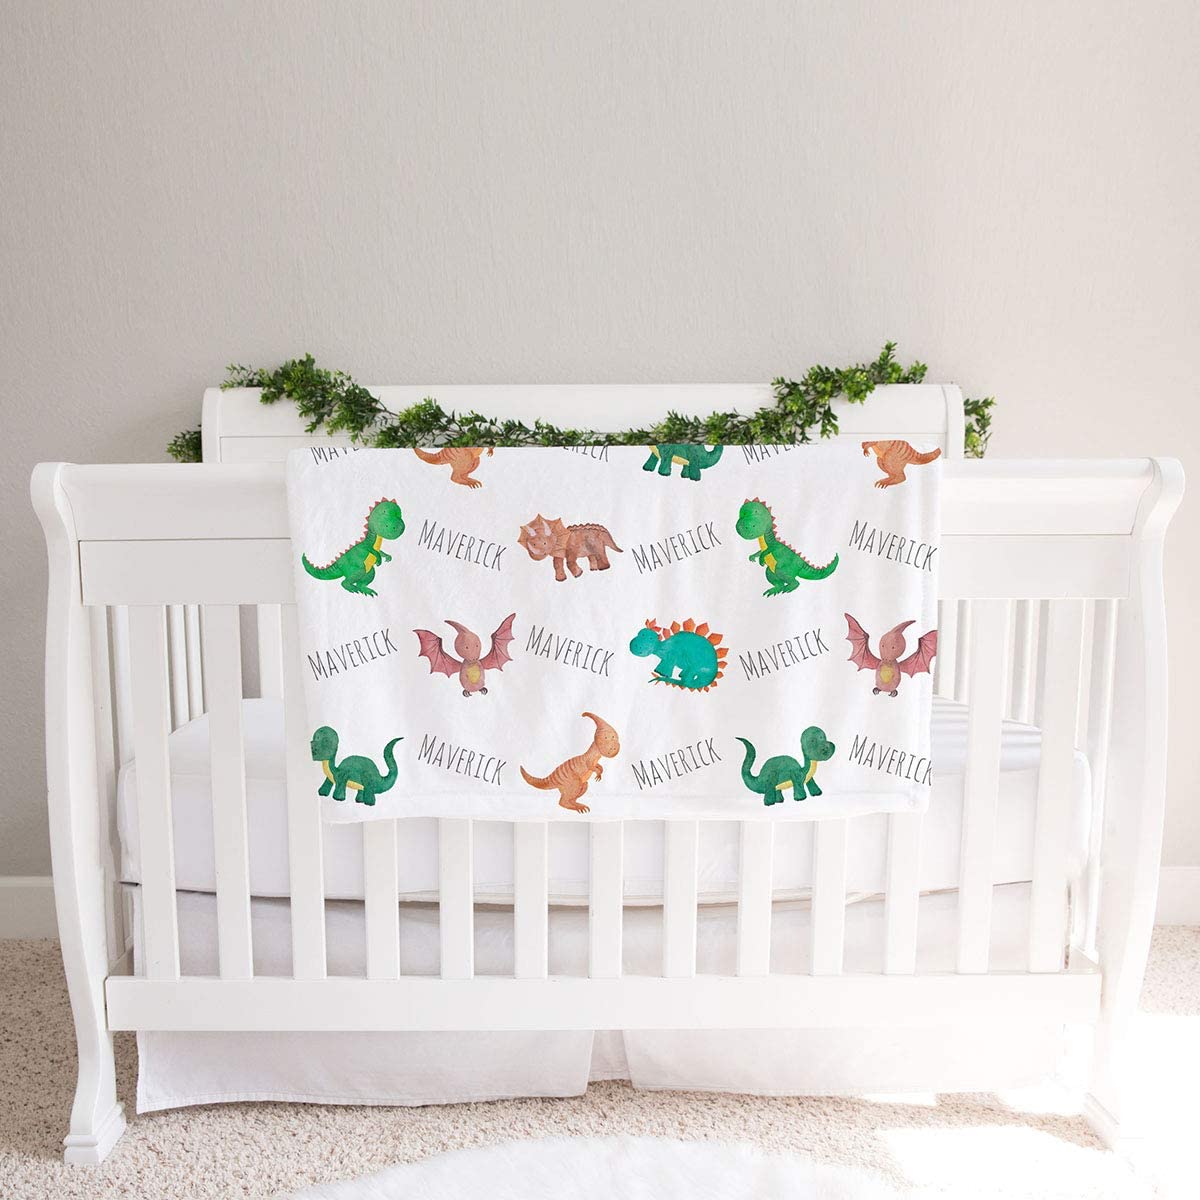 Personalized Dinosaur Fleece Baby Blanket, baby gift